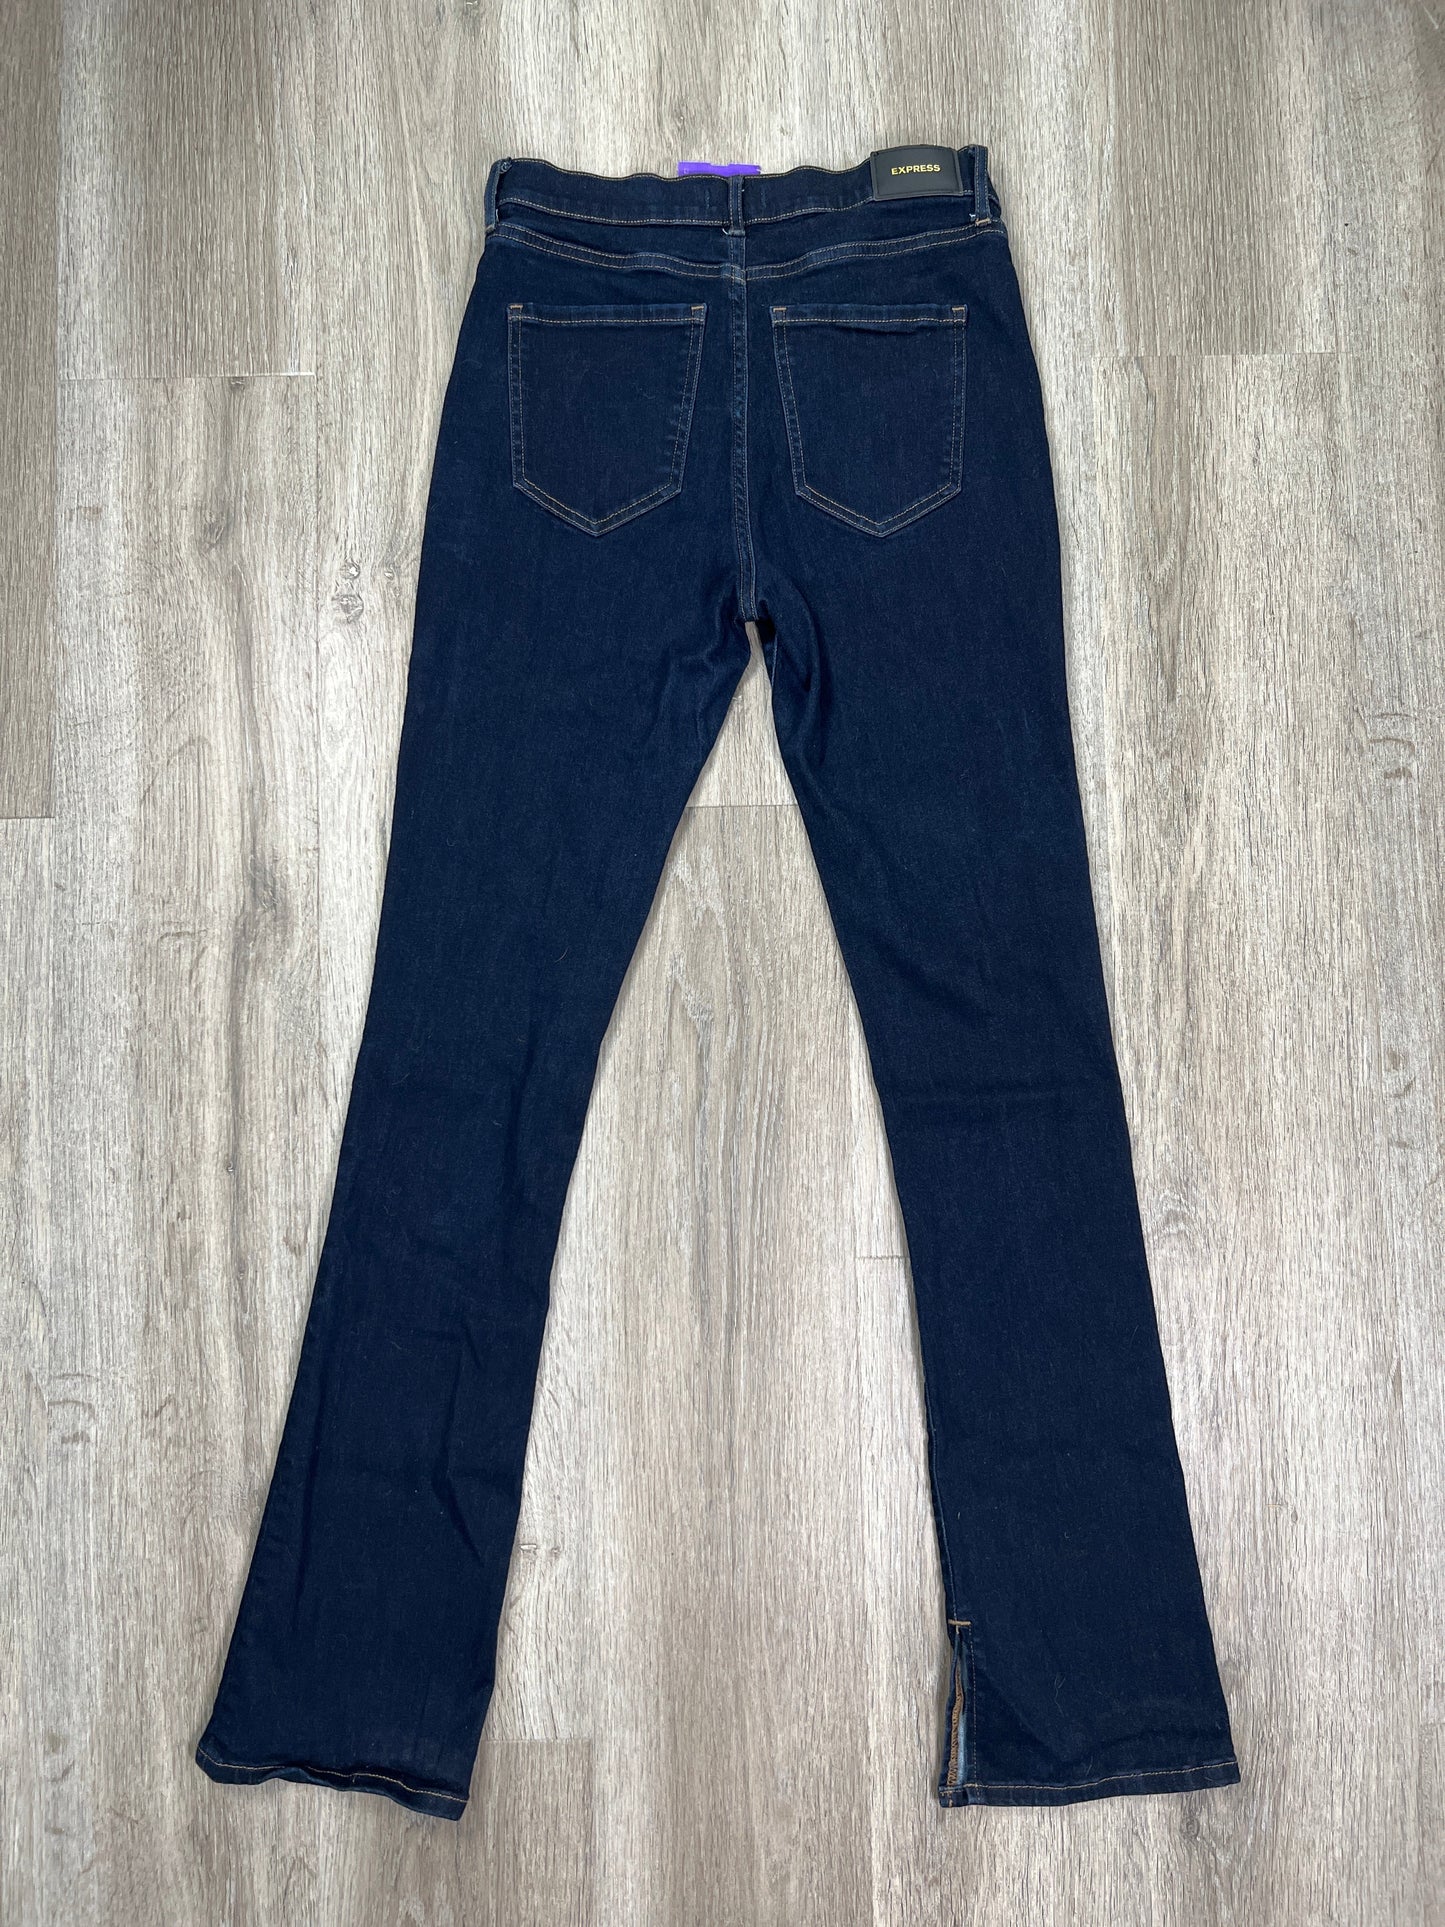 Blue Denim Jeans Boot Cut Express, Size 8